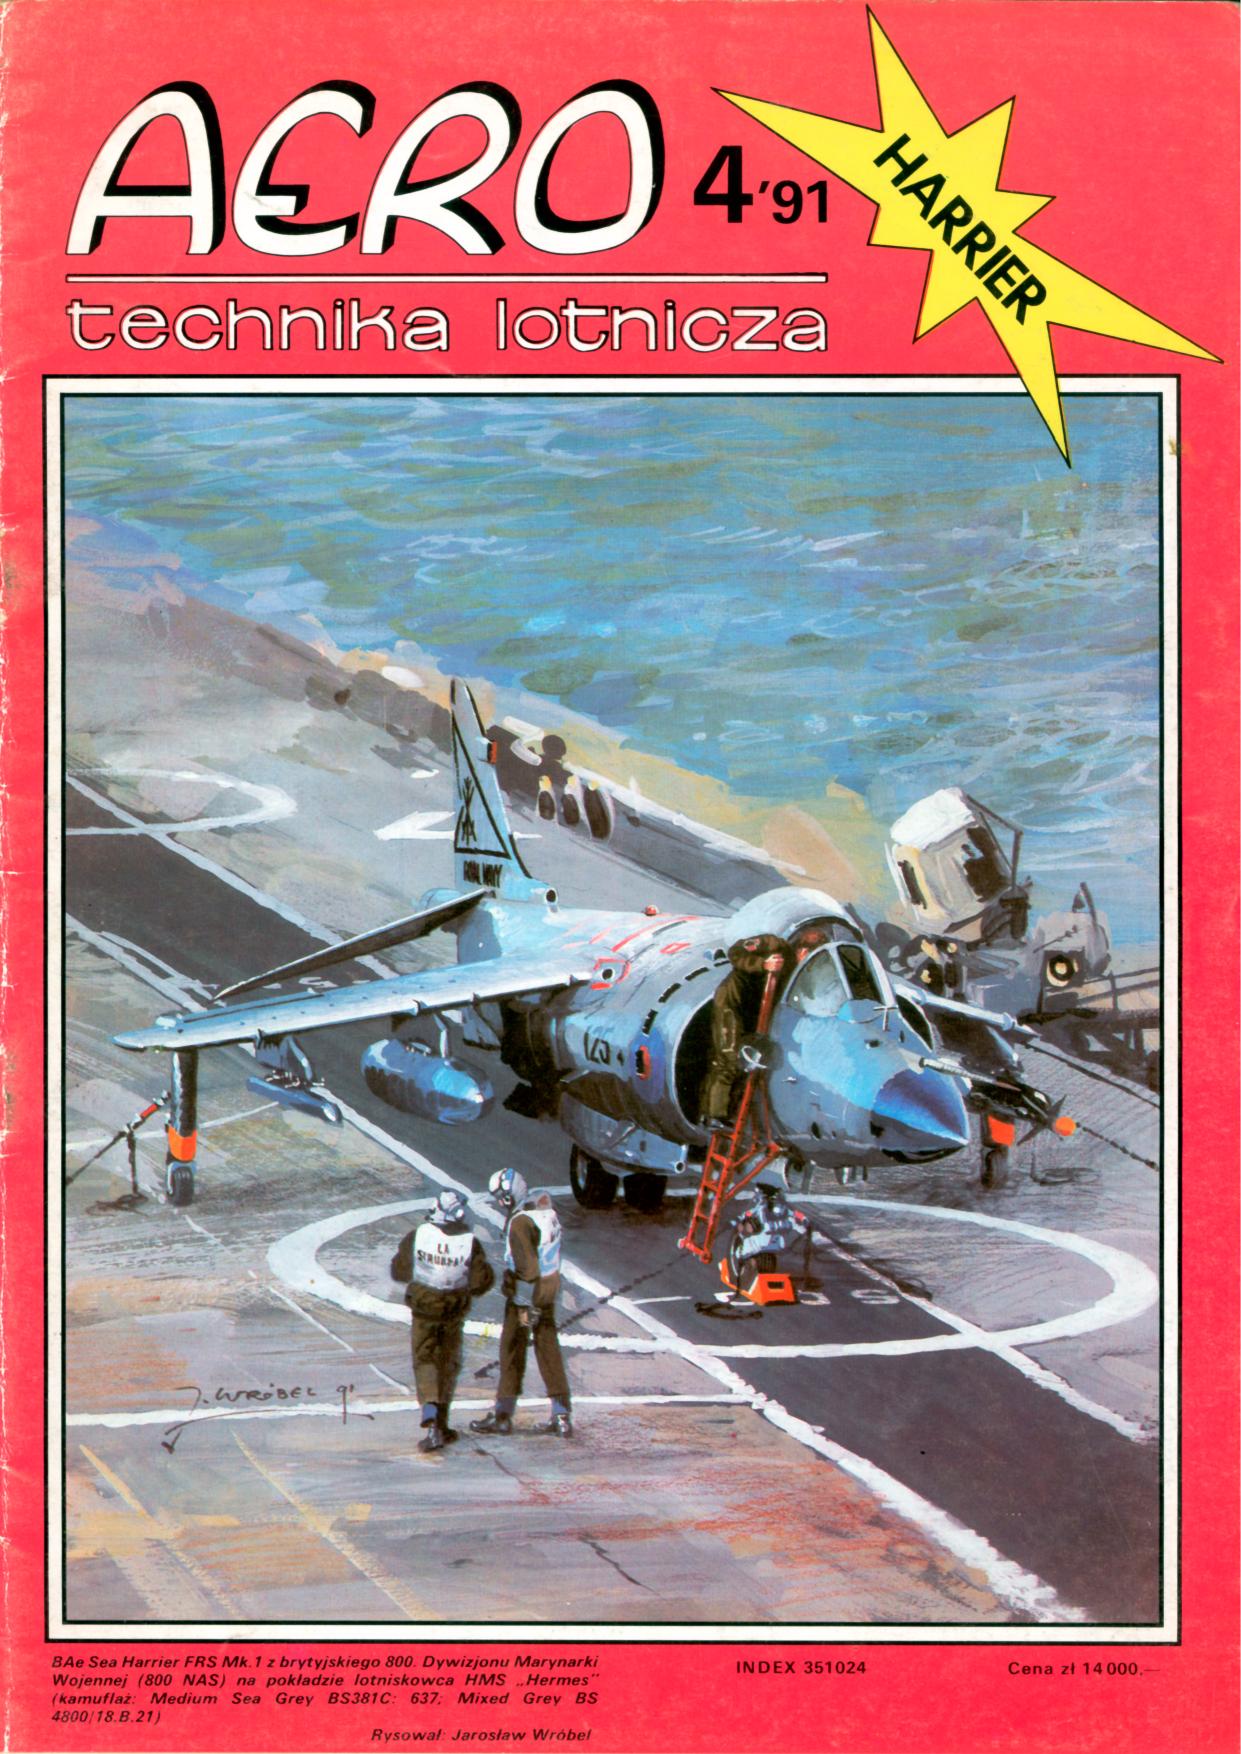 Aero Technika Lotnicza - Aero TL 1991-04 okładka.jpg